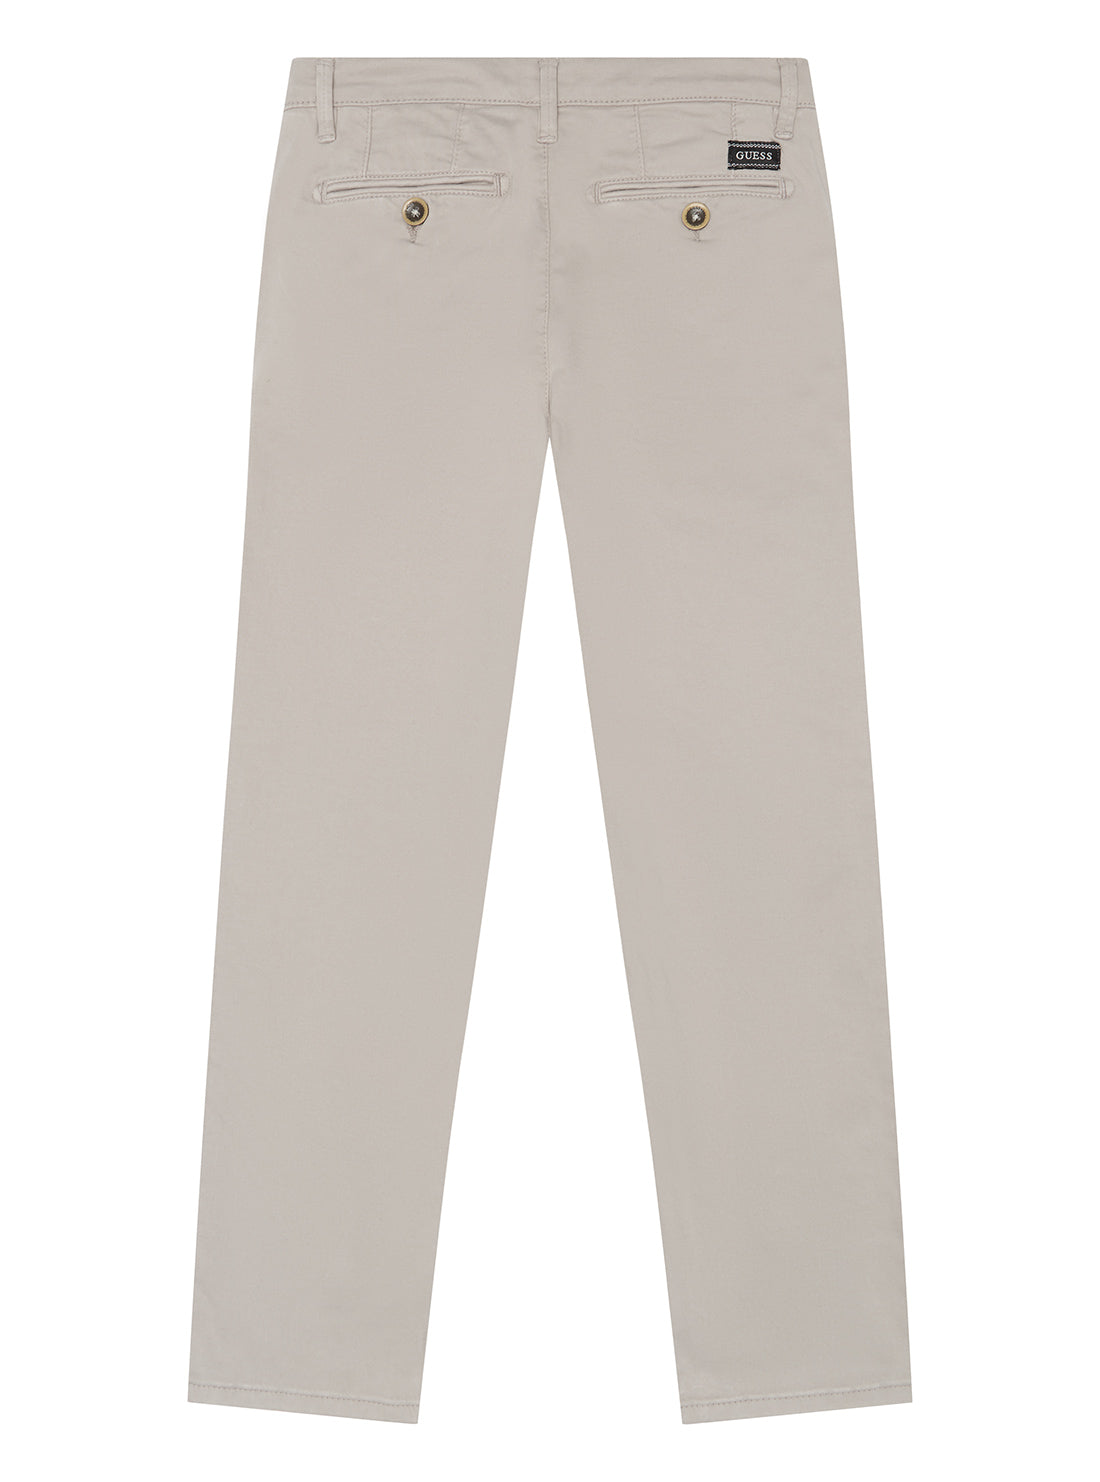 Grey Sateen Chino Pants (2-7)